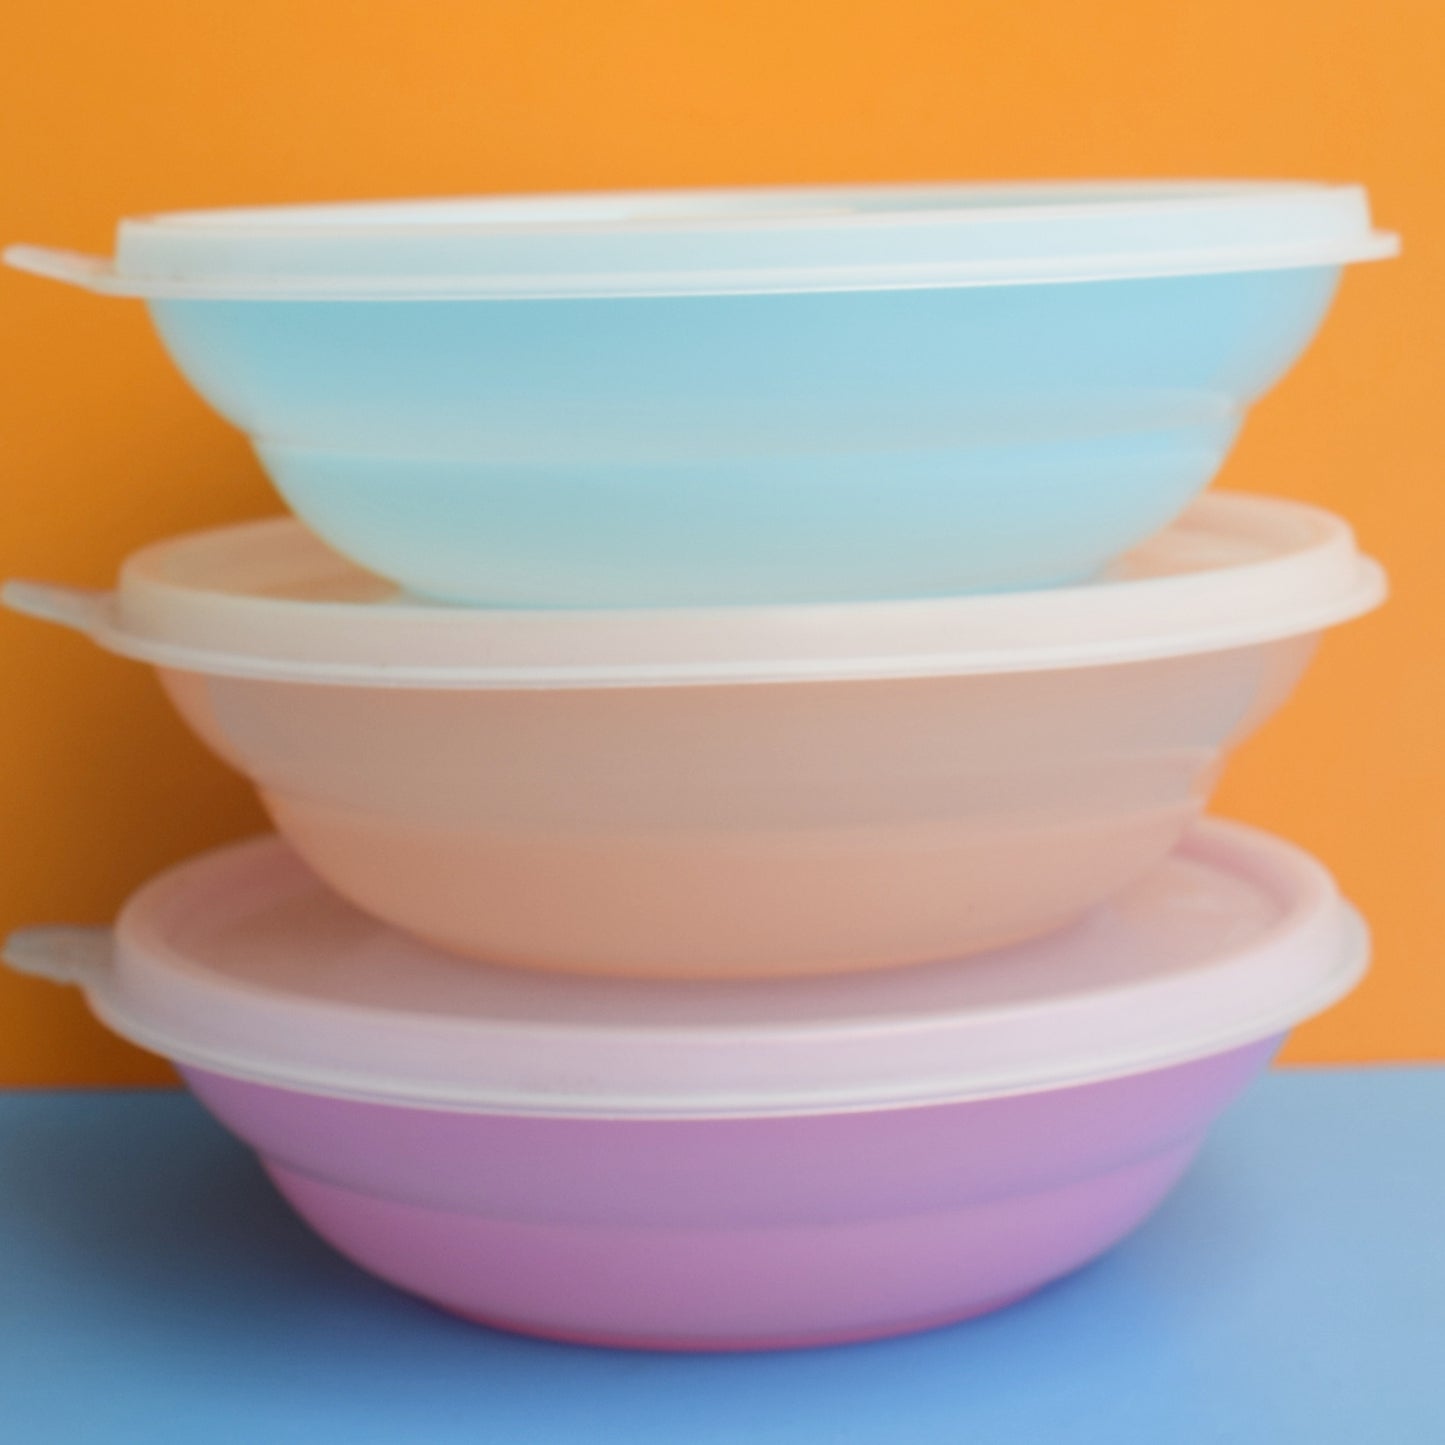 Vintage 1960s Tupperware Bowls- Pastel